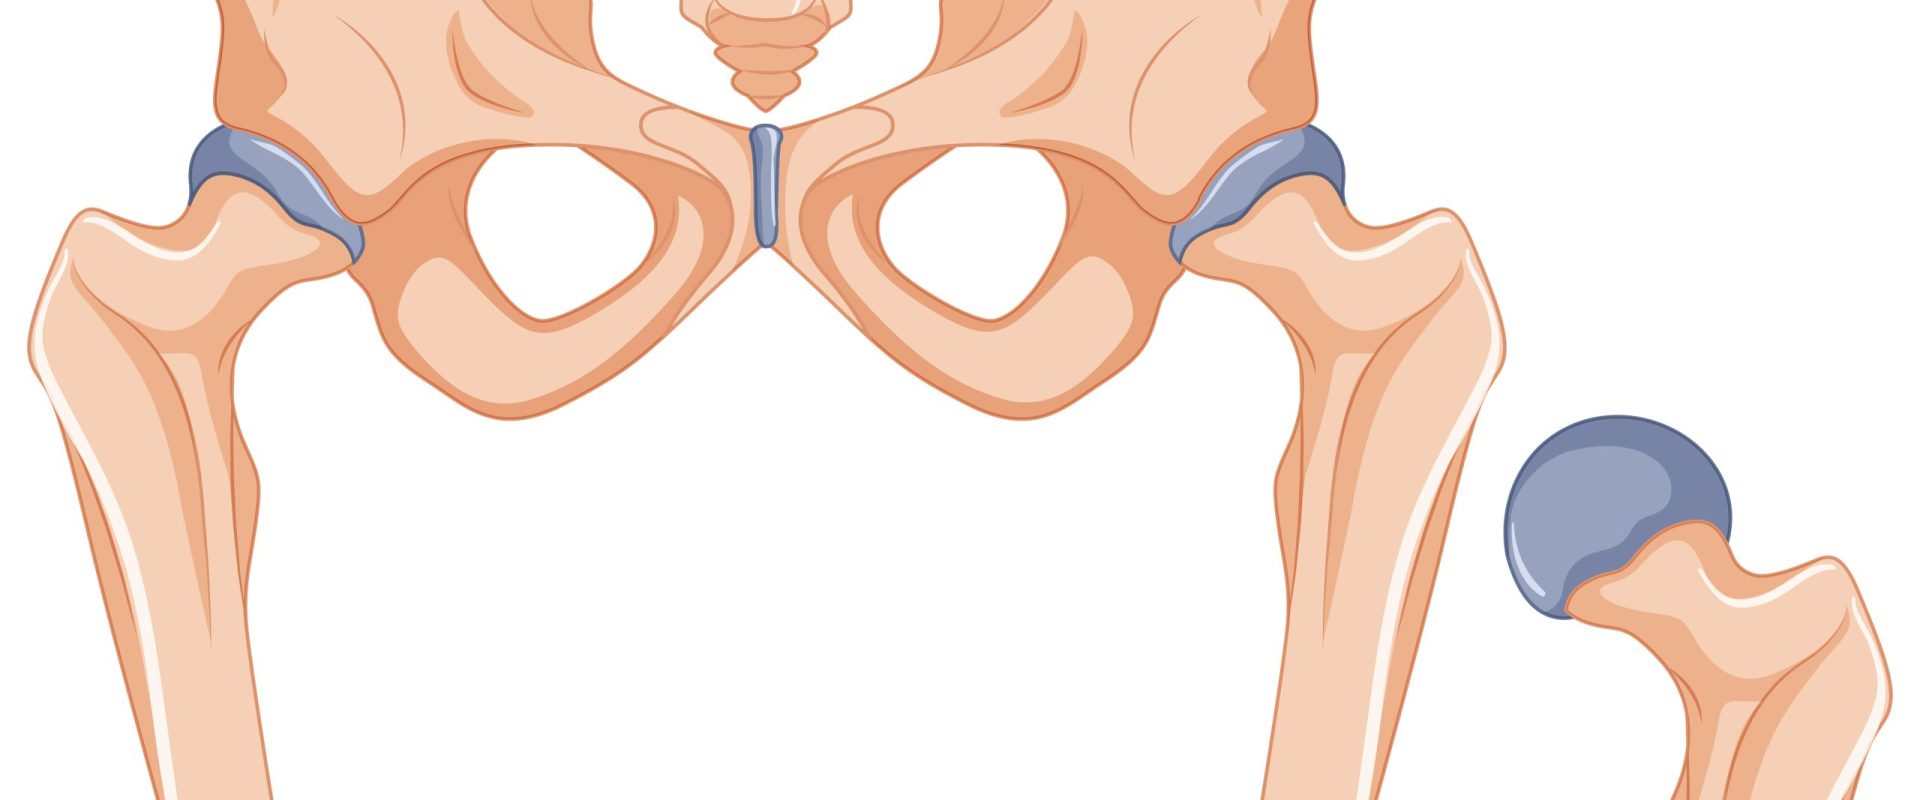 Hip bones in human body illustration